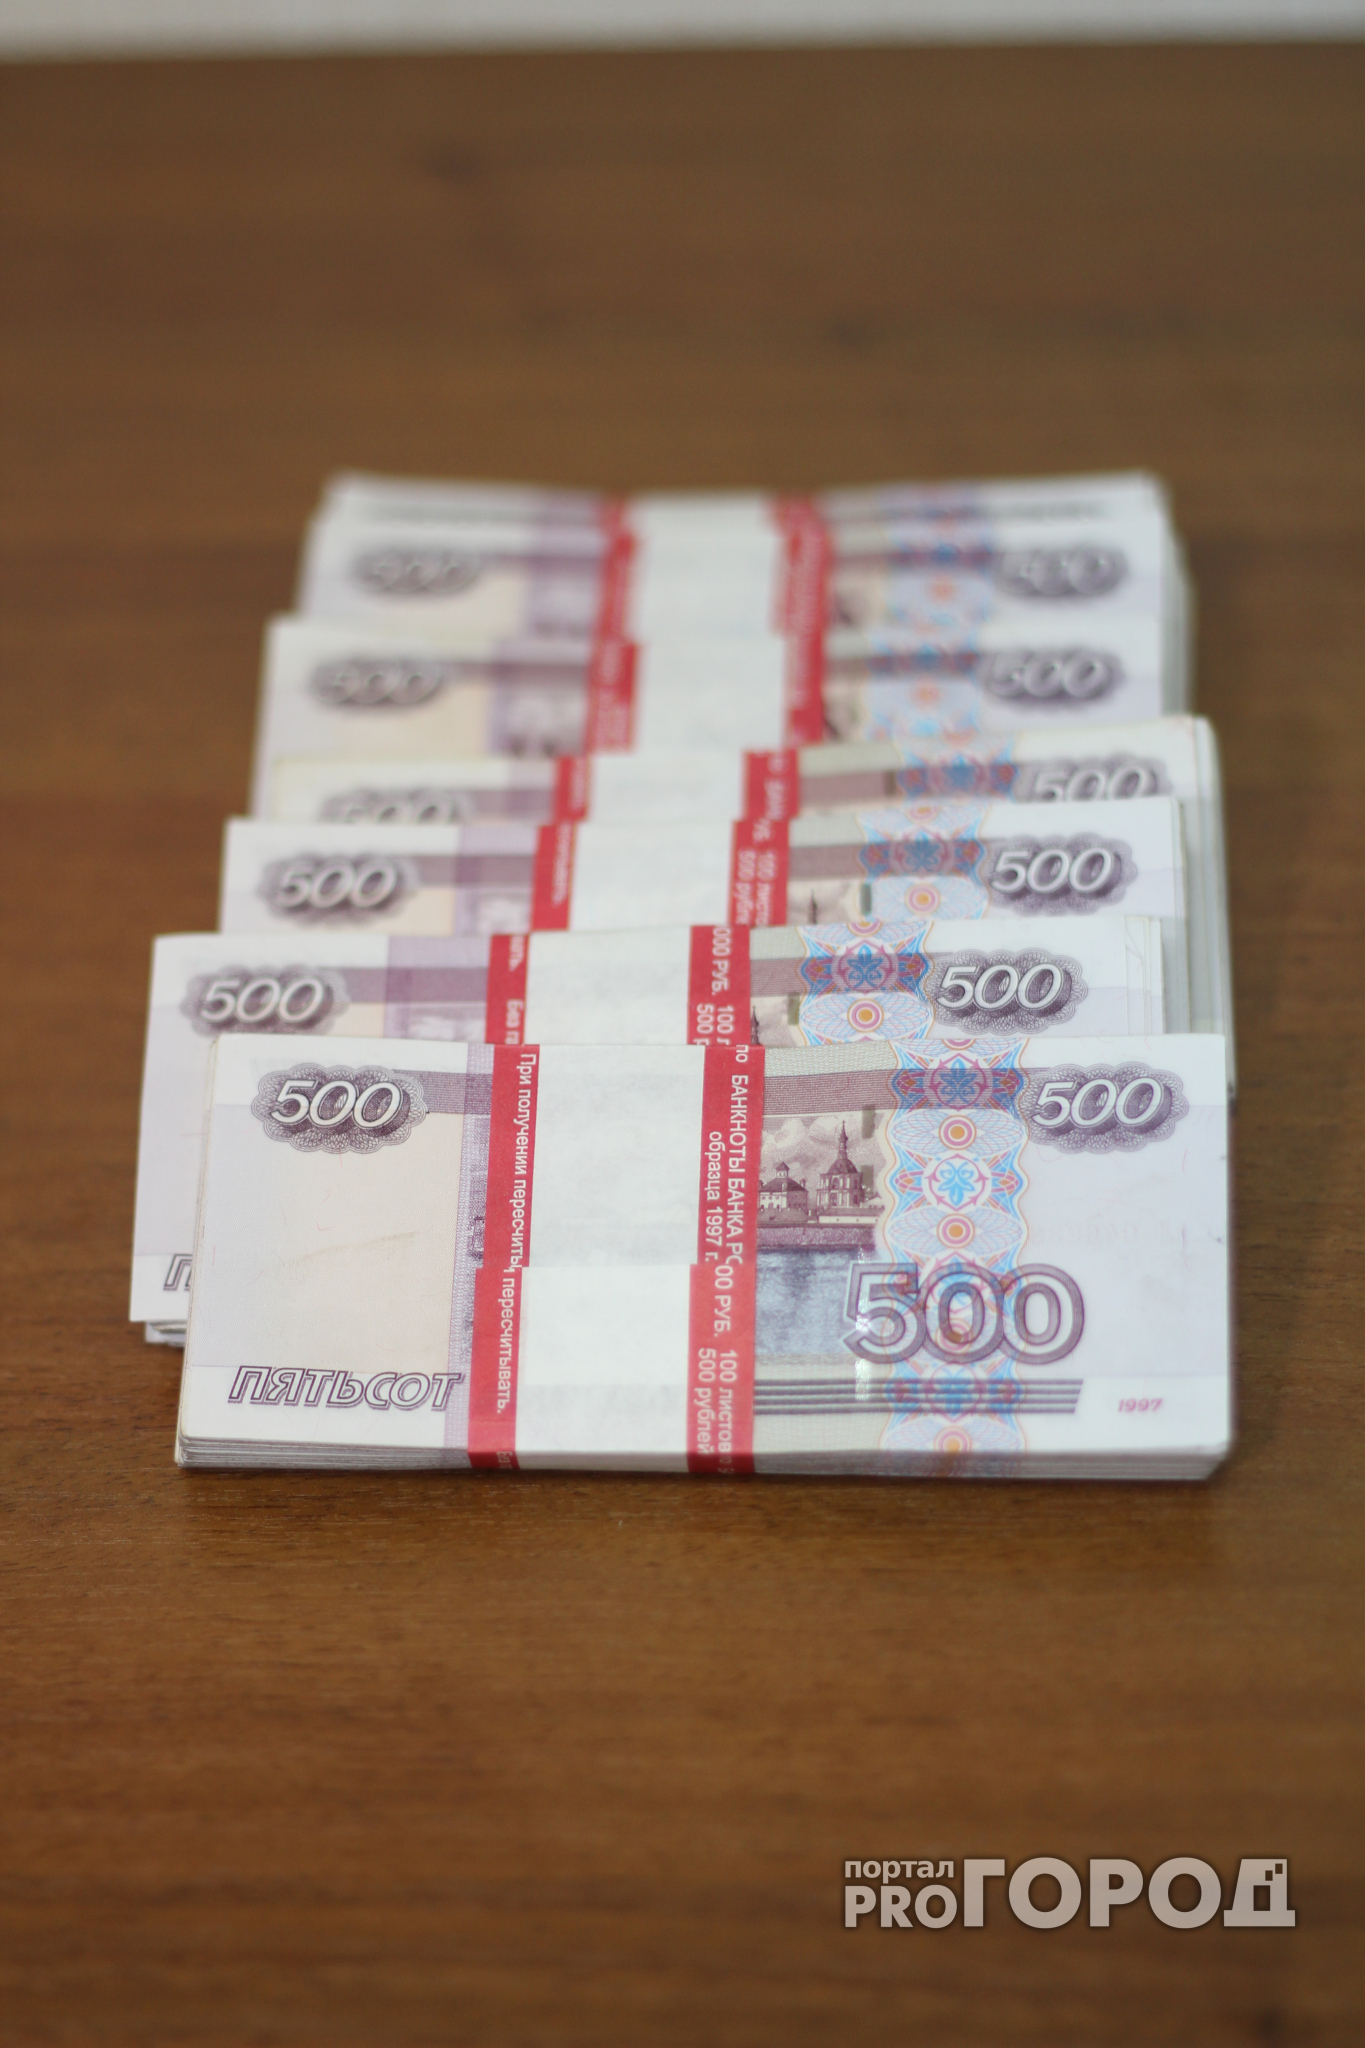 Нижегородец обманул автосалон на полтора миллиона рублей